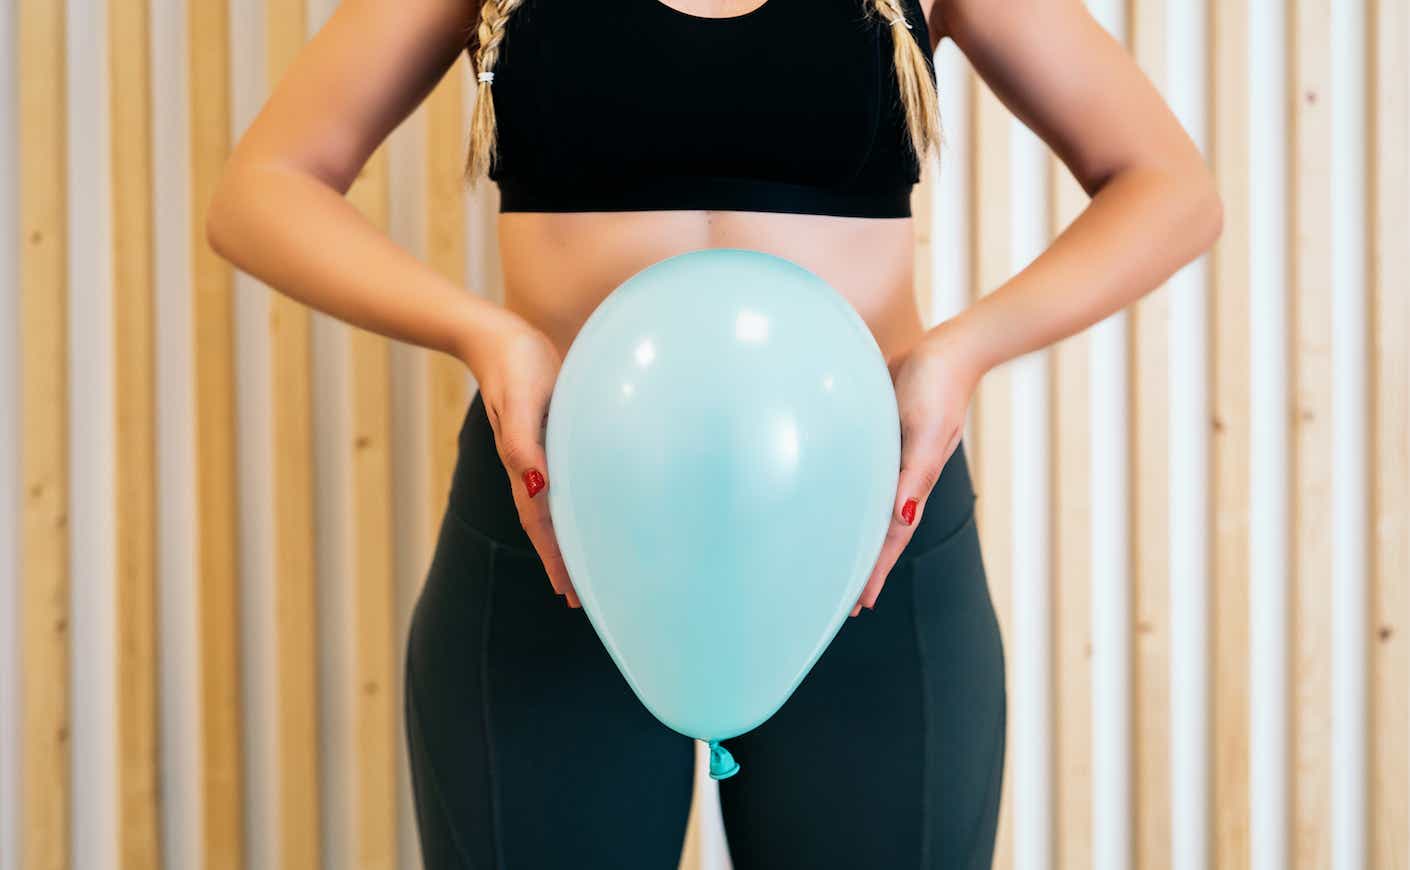 Model holding balloon to symbolize pelvic health